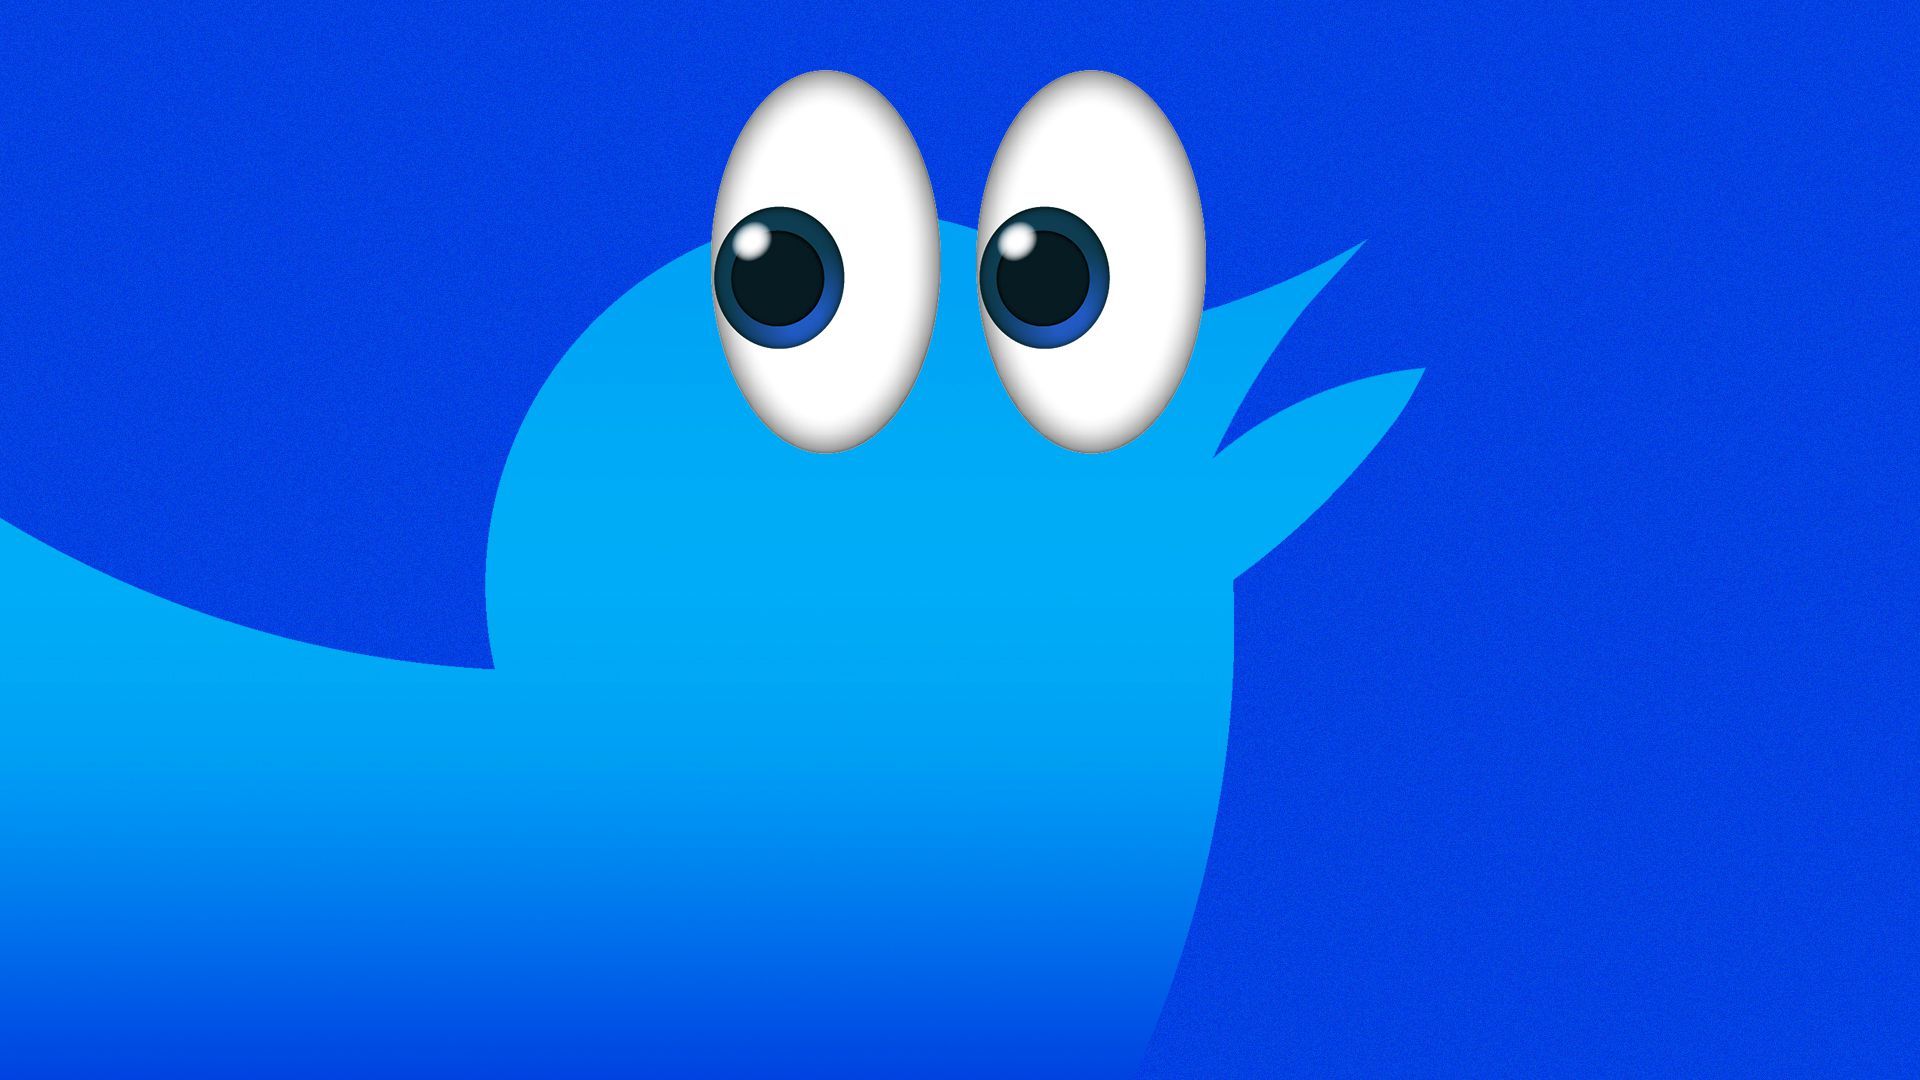 Illustration of the Twitter bird logo with emoji side eyes